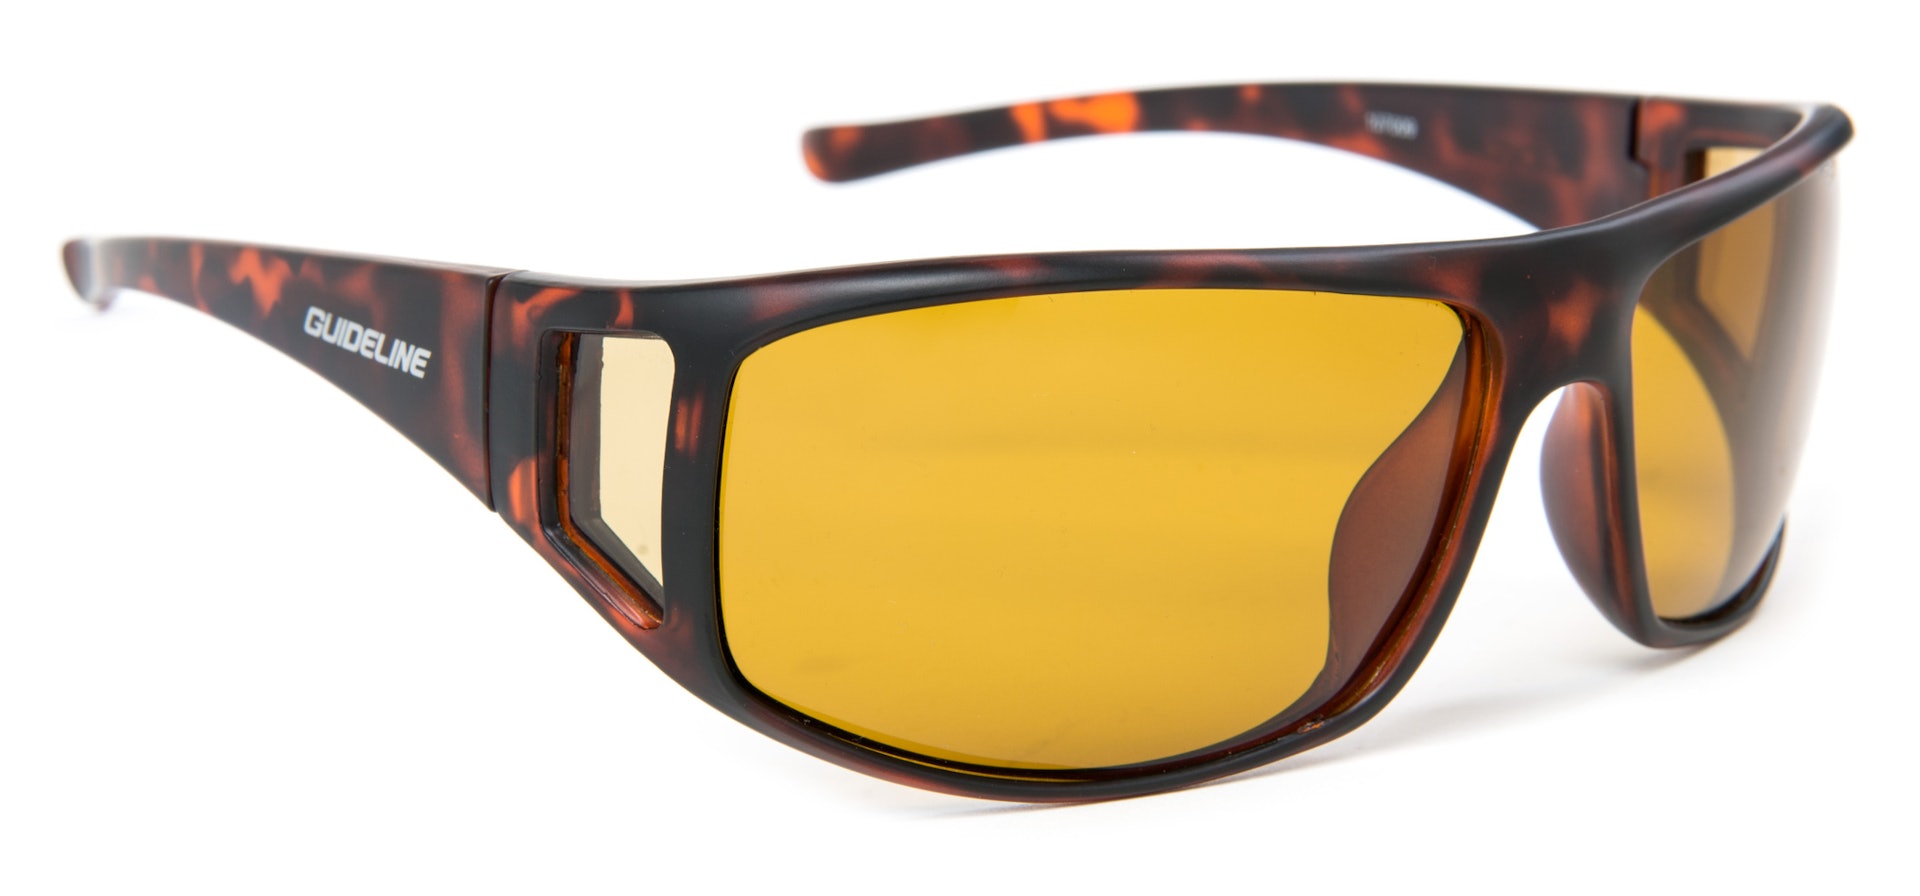 Tactical Sunglasses - Yellow Lens (slide 1 of 1)